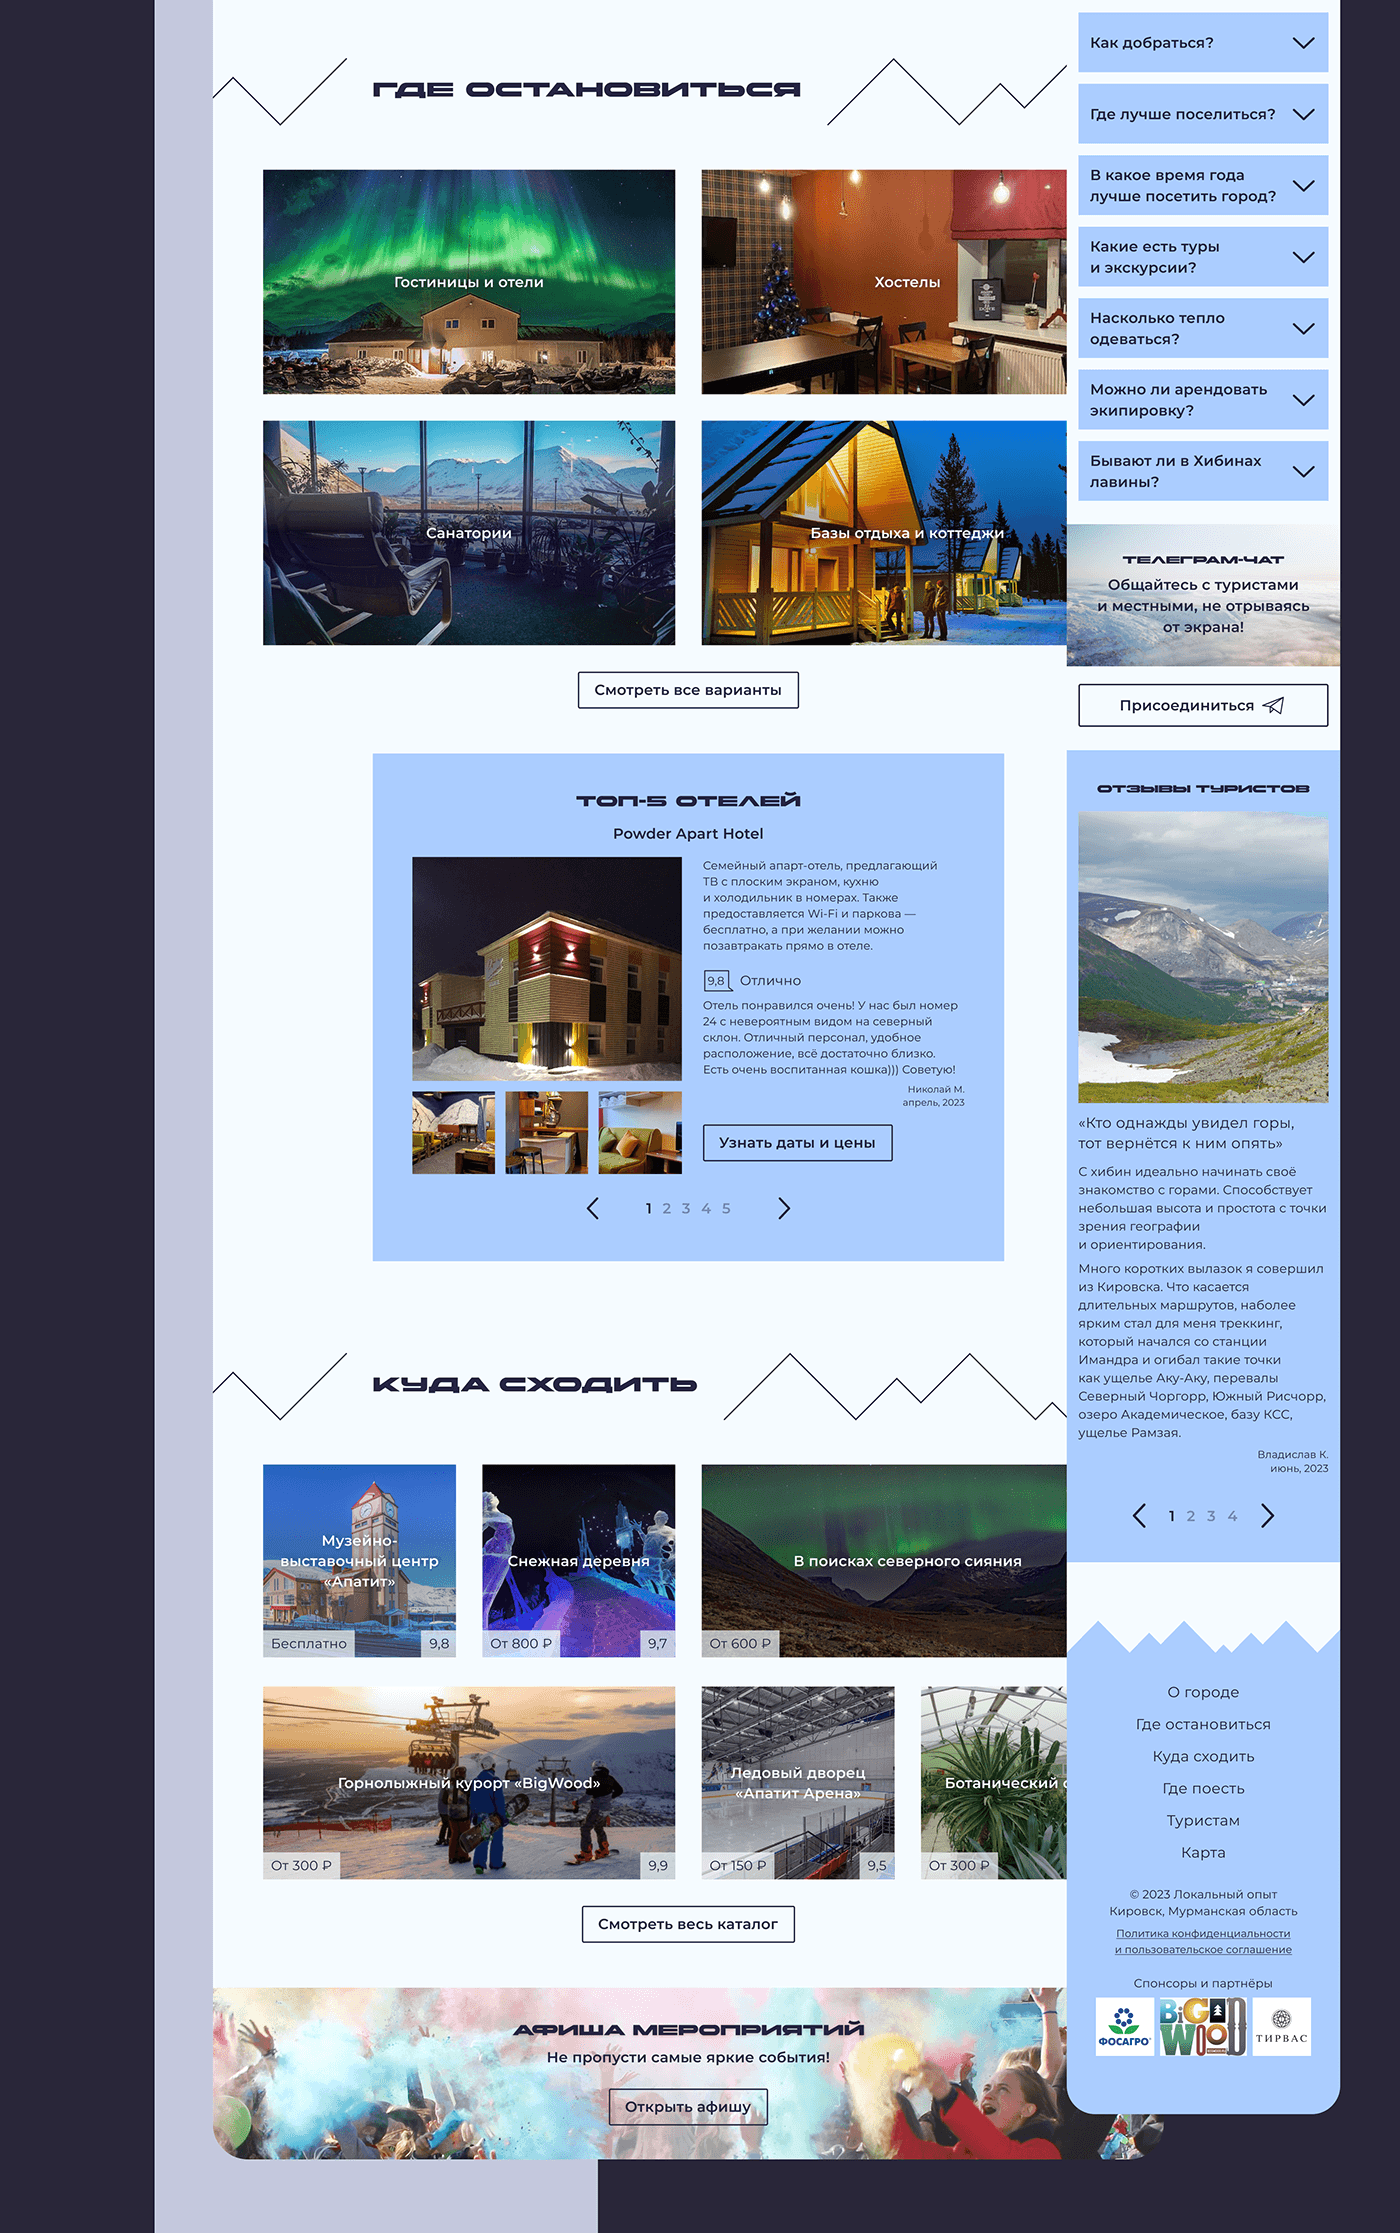 Адаптивный дизайн туристического сайта